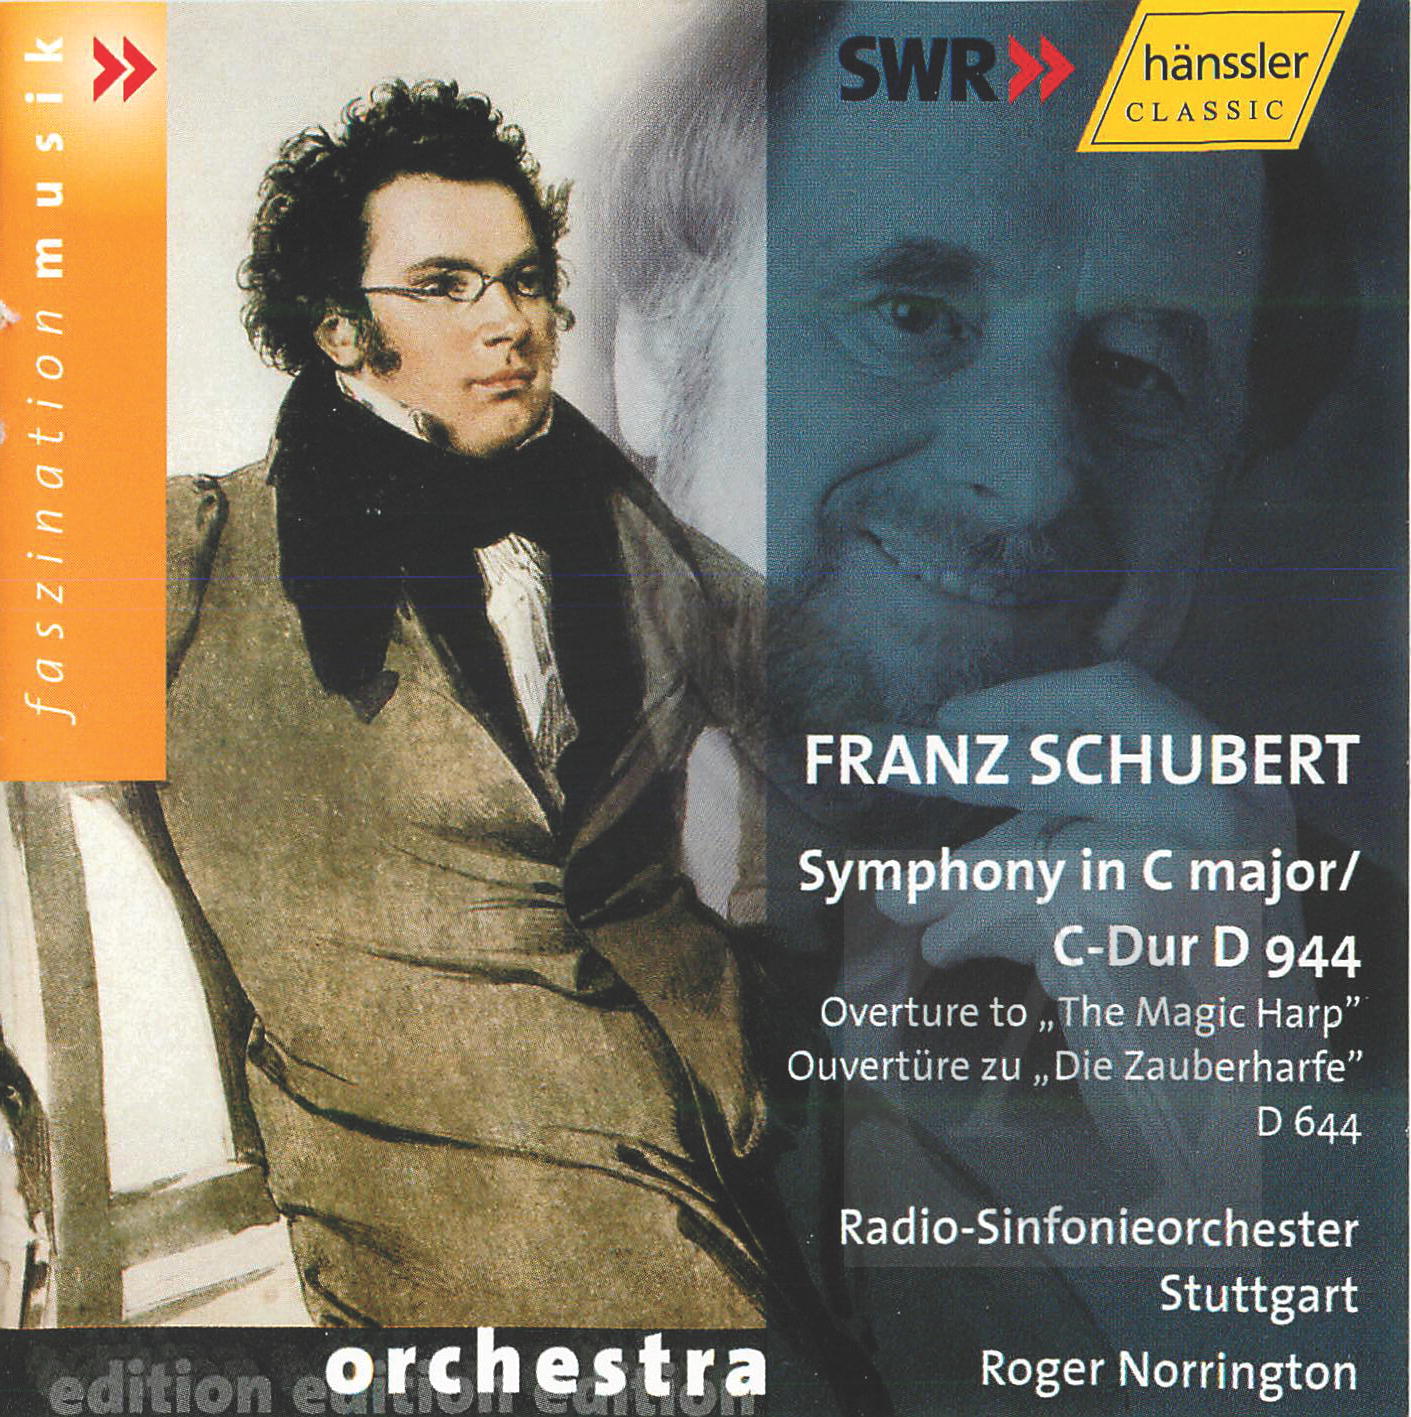 Franz Schubert: Symphony in C major | Alexander Street, part of Clarivate